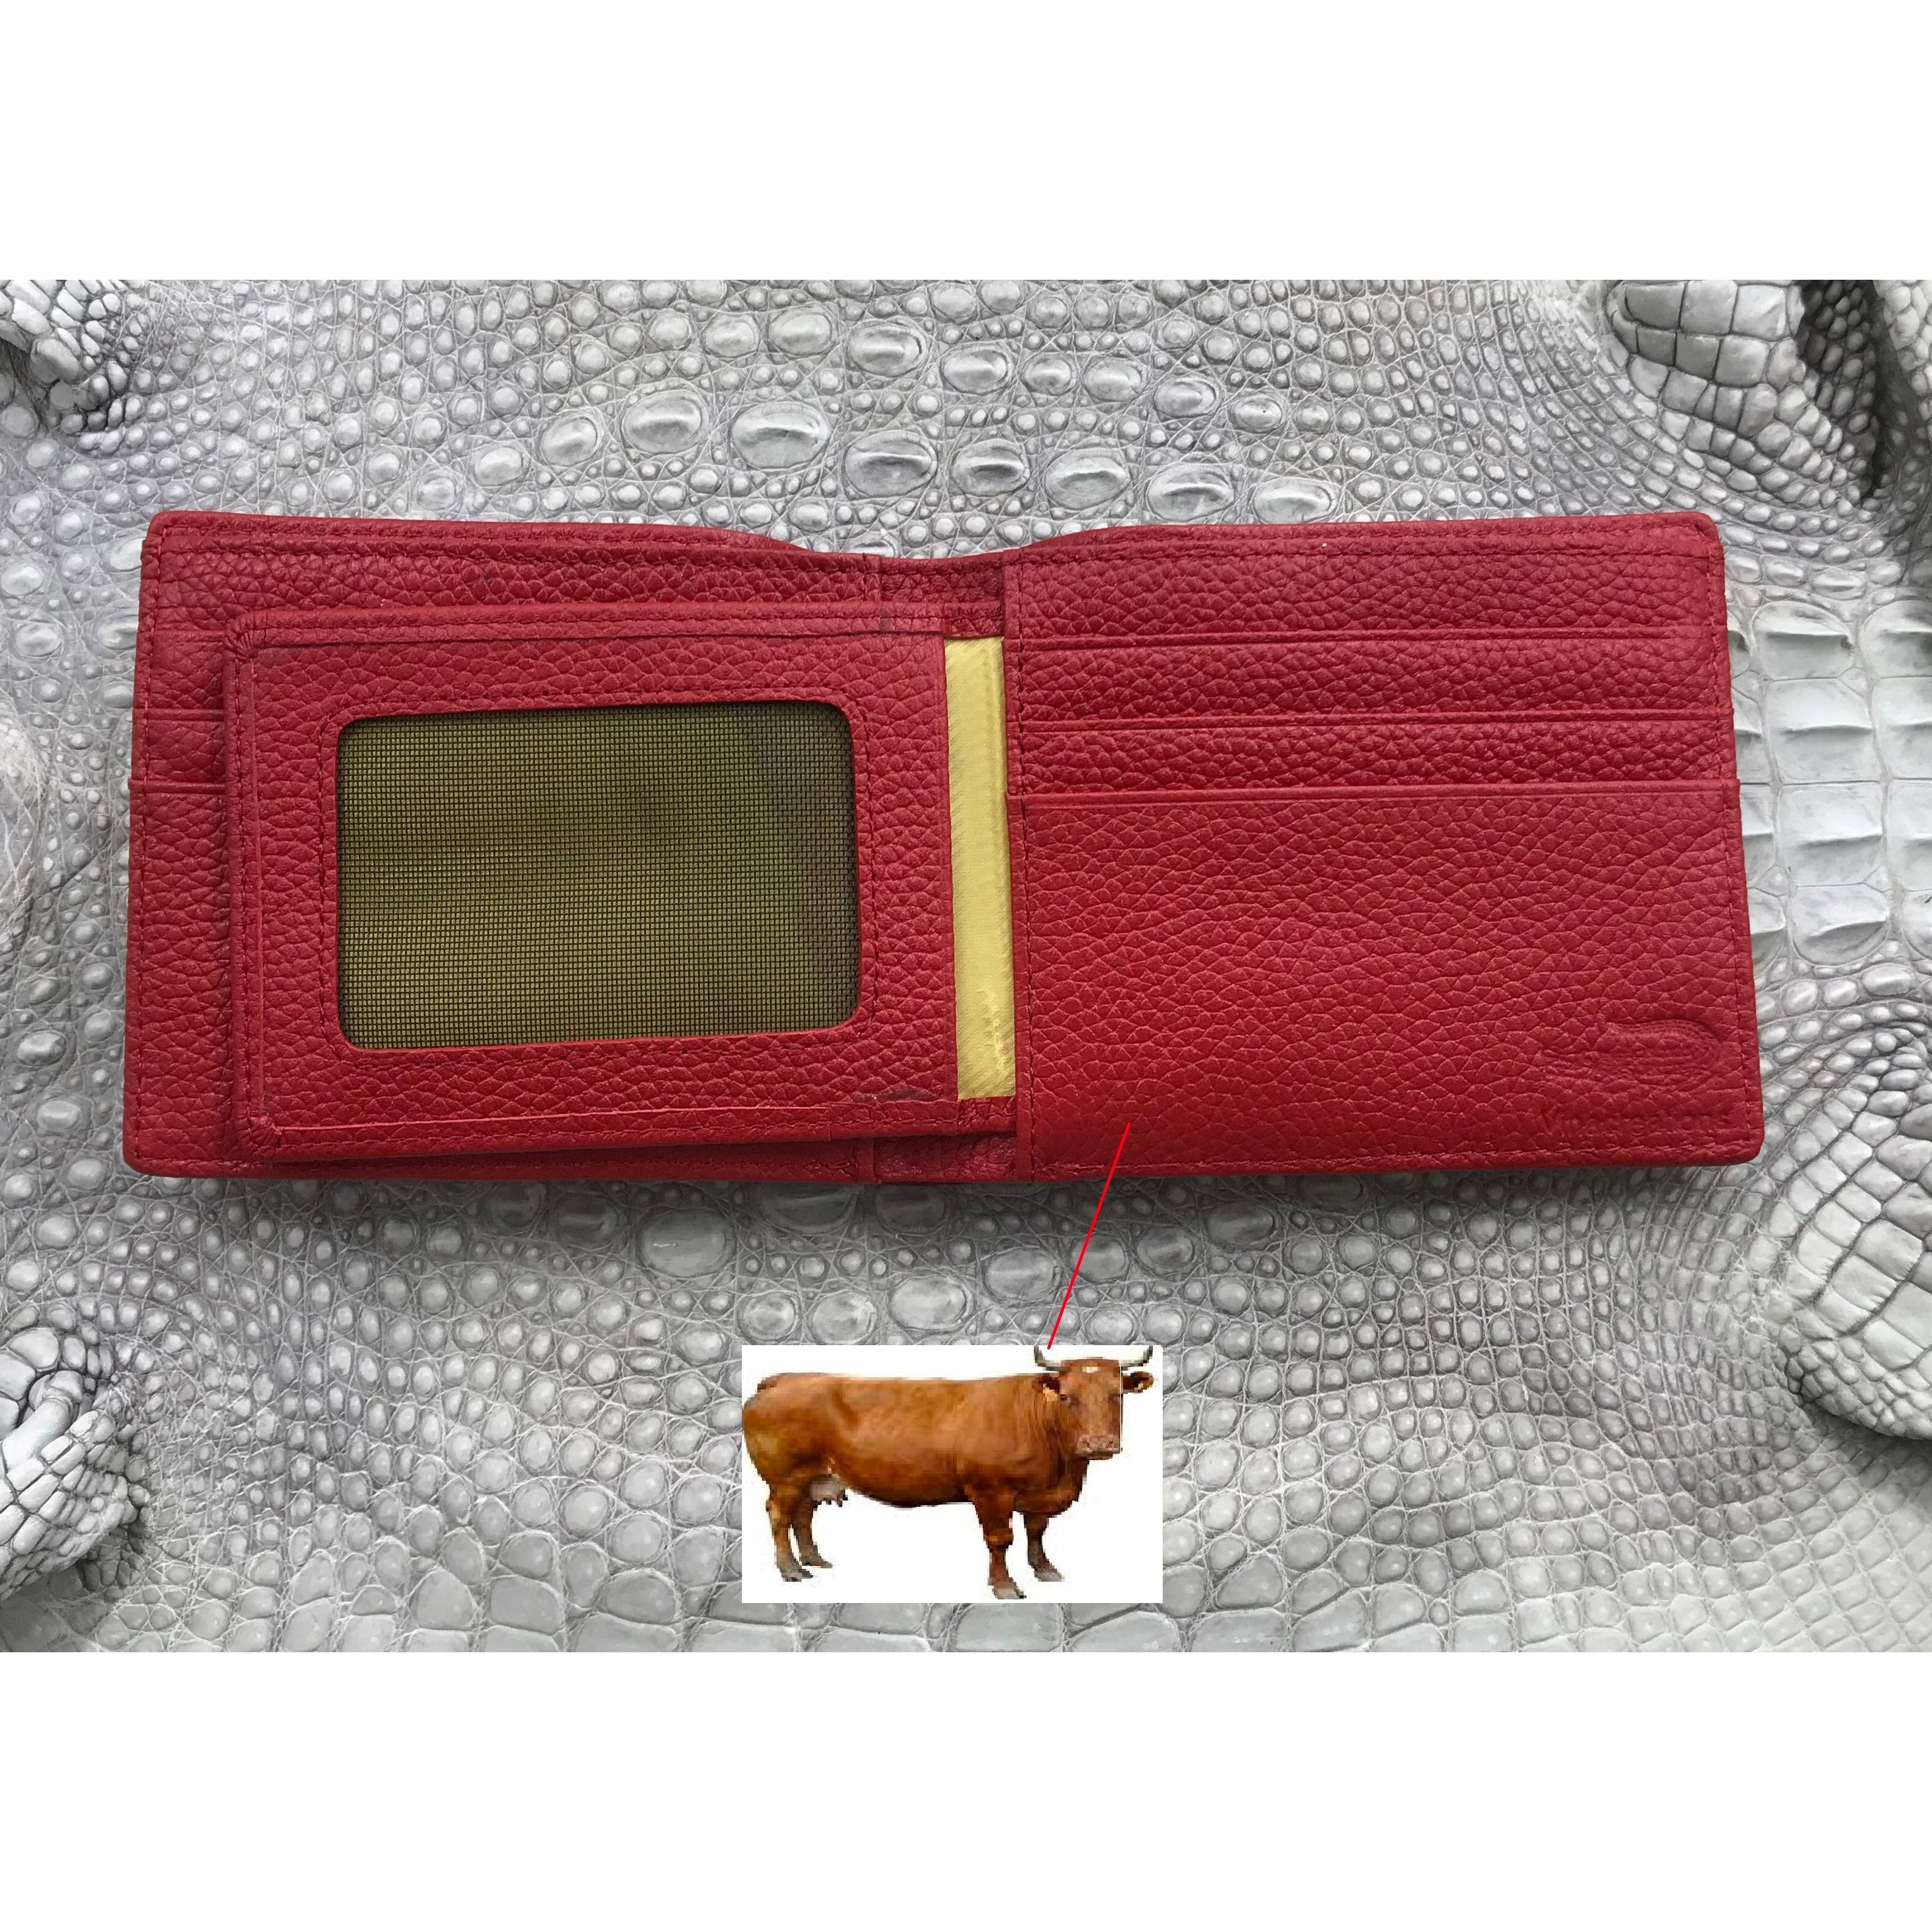 Red Burgundy Alligator Skin Bifold Wallet For Men | Handmade Crocodile Leather Wallet RFID Blocking | VL5539 - Vinacreations